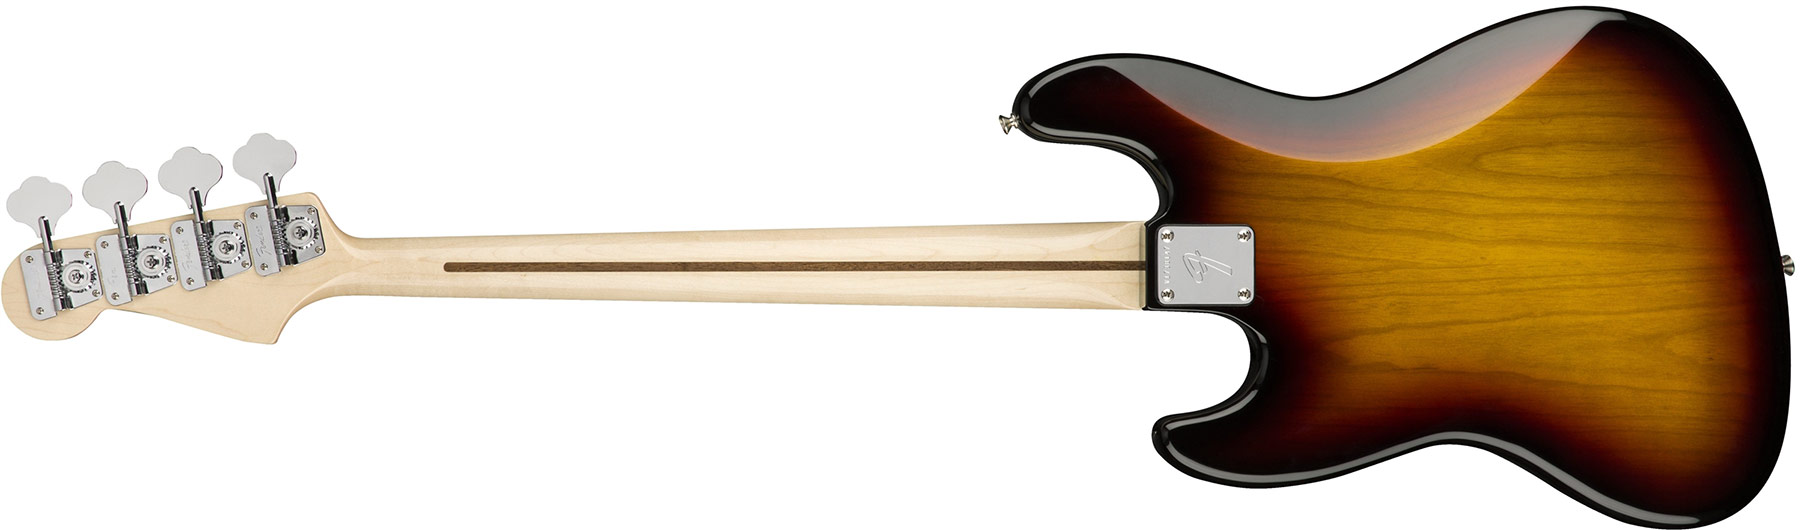 Fender Jazz Bass '70s American Original Usa Mn - 3-color Sunburst - Solid body elektrische bas - Variation 2